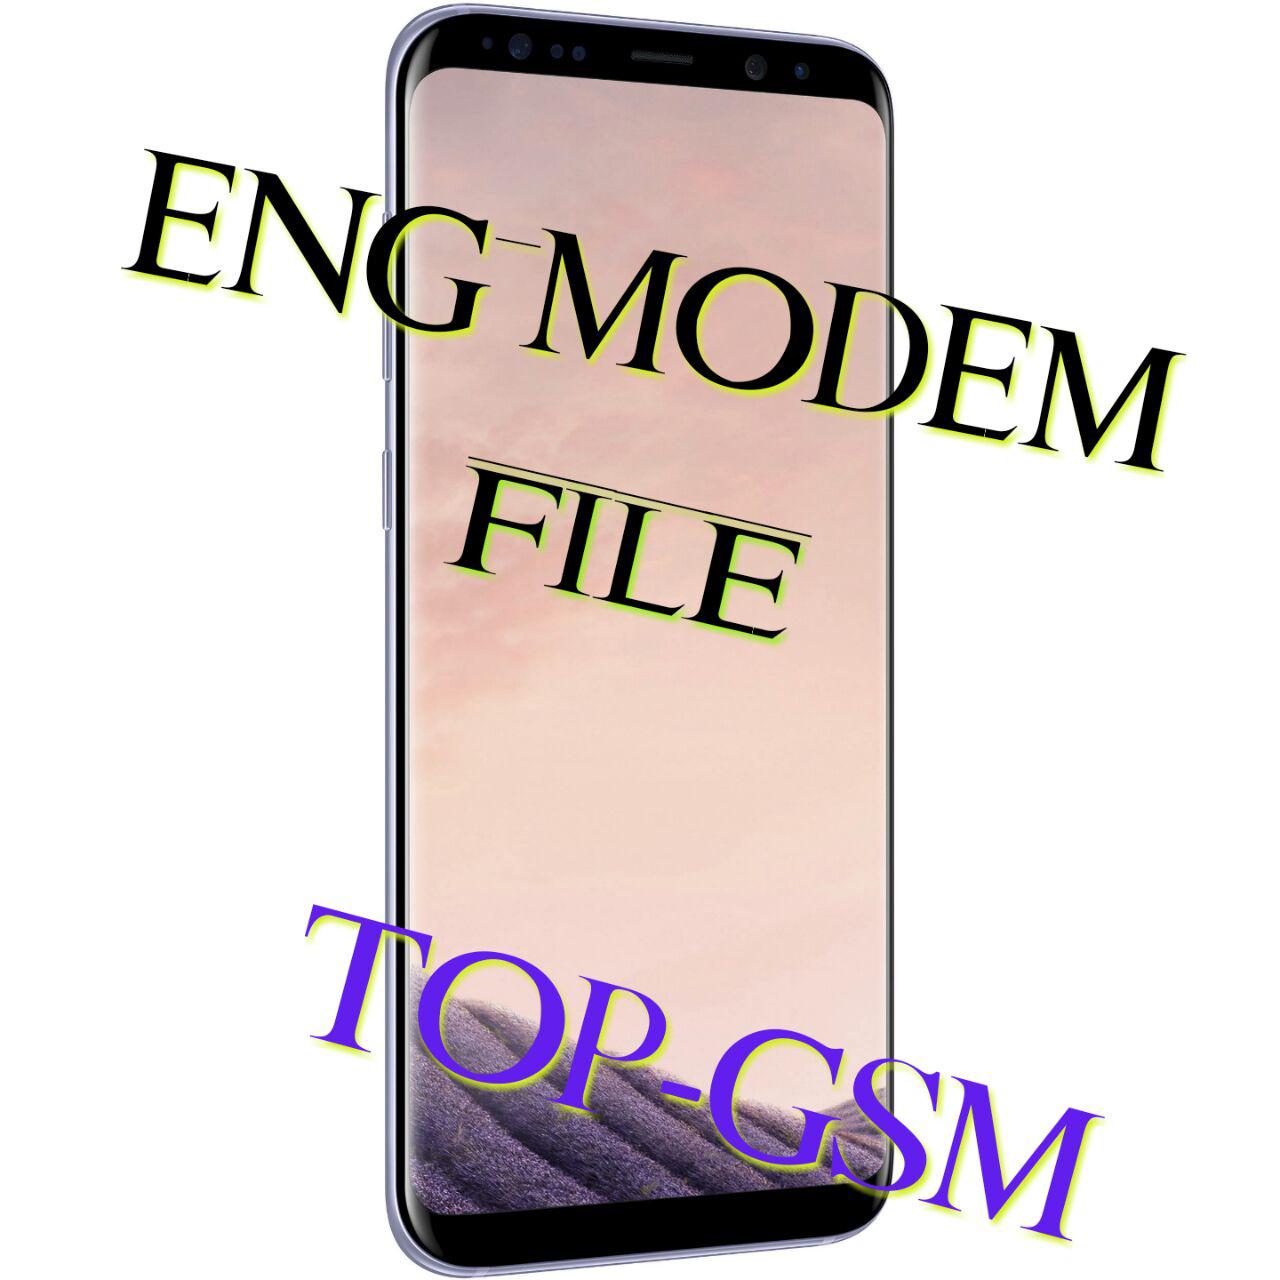 فایل ENG MODEM سامسونگ G925T-U5 حل مشکل سریال و بیسباند و..